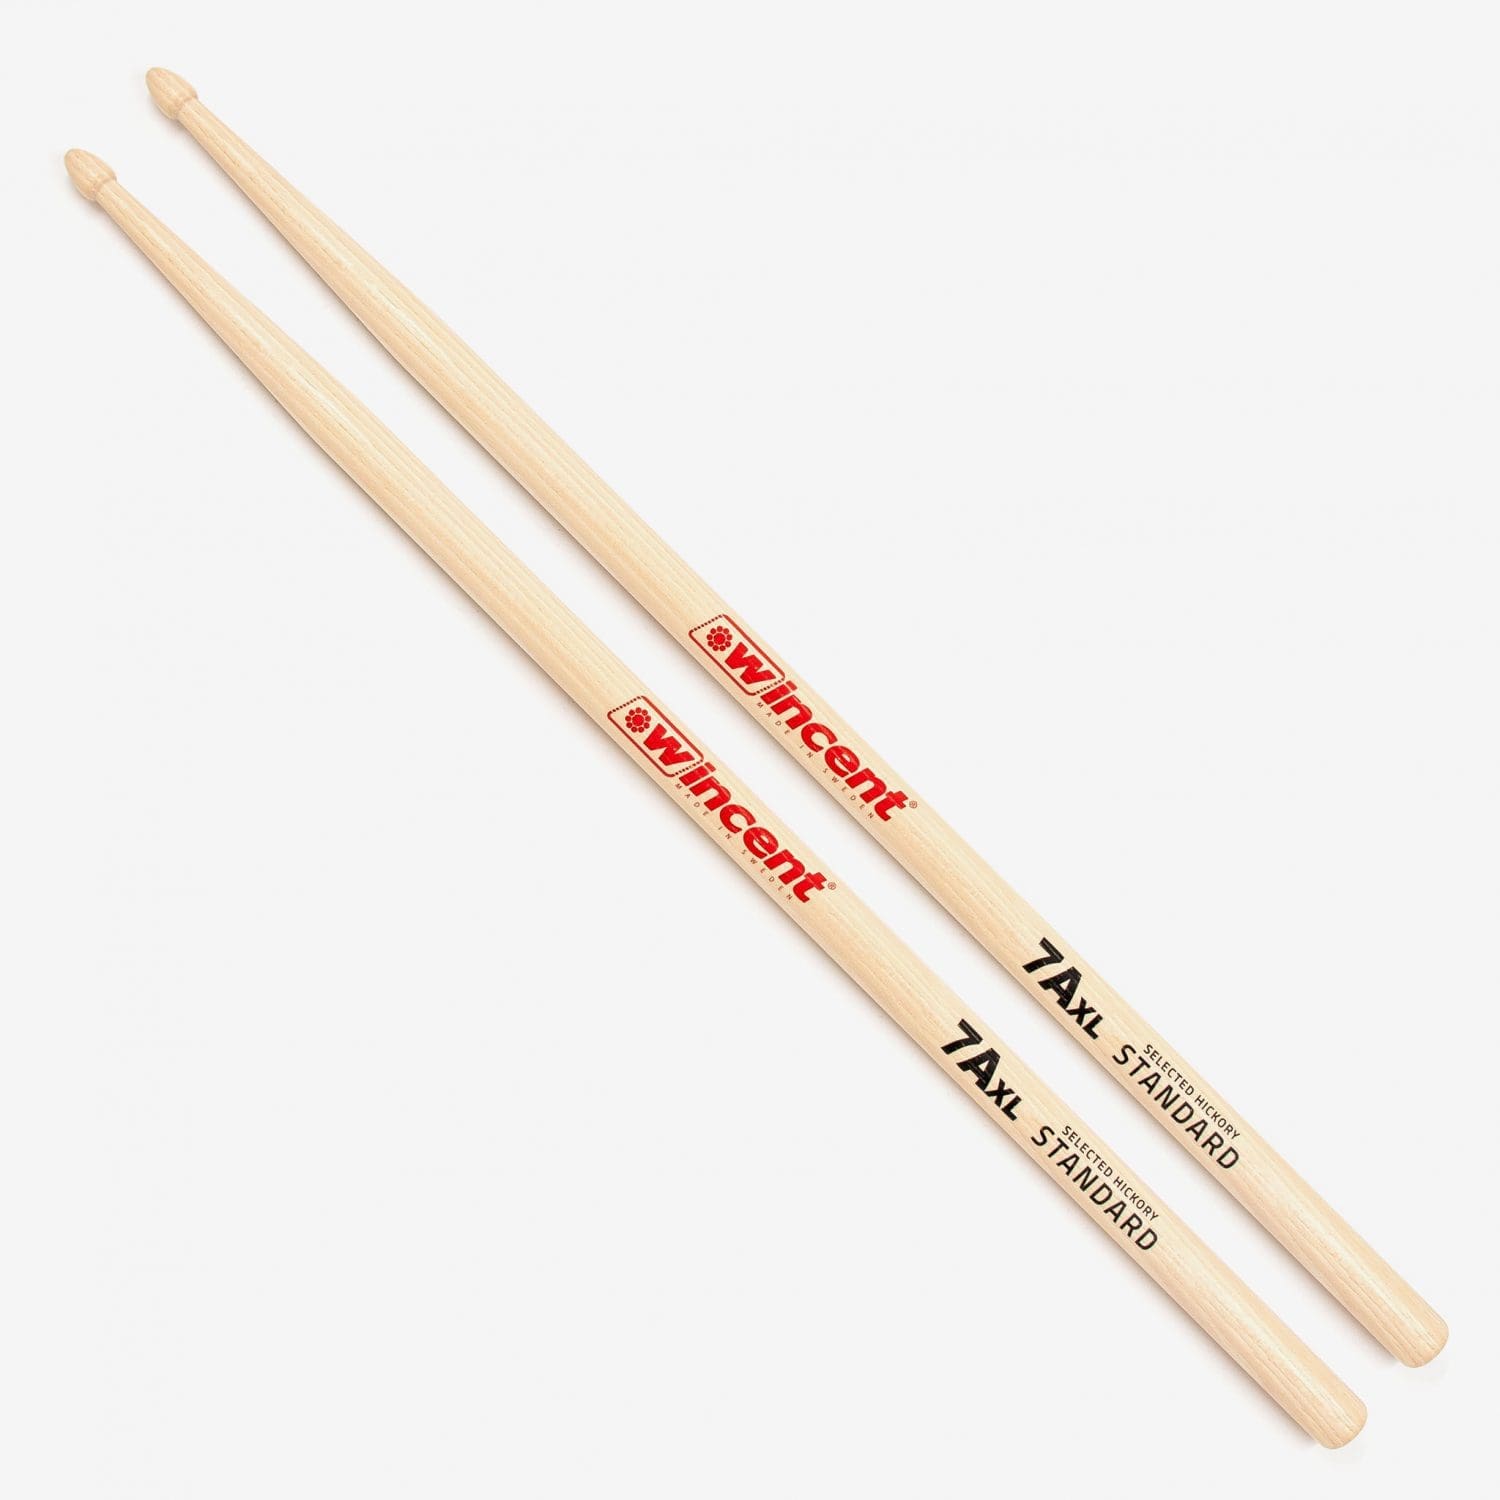 Hickory Standard Taper Extra Reach Drumsticks